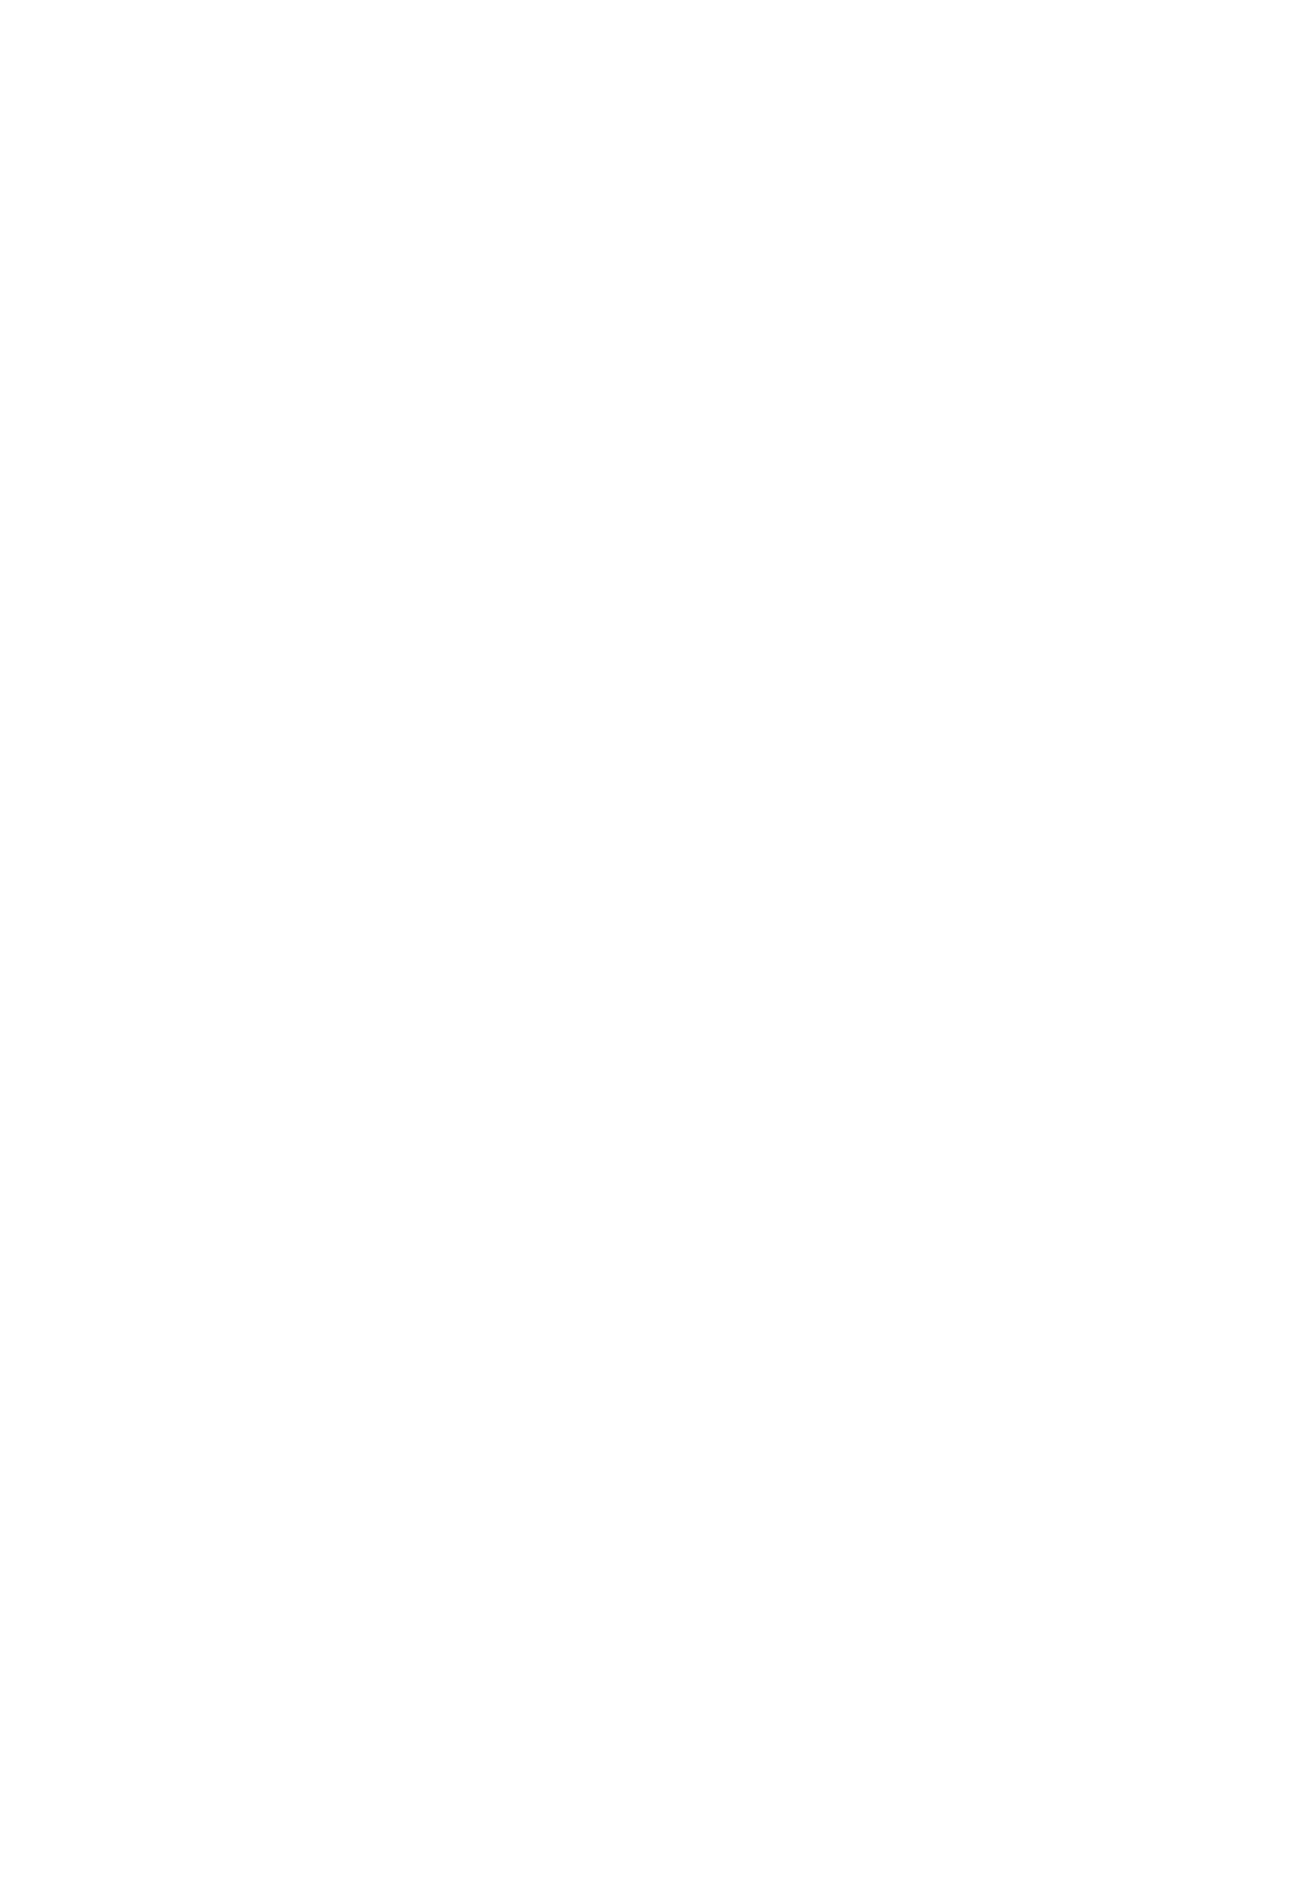 The Queen's Awards for Enterprise: Innovation 2019